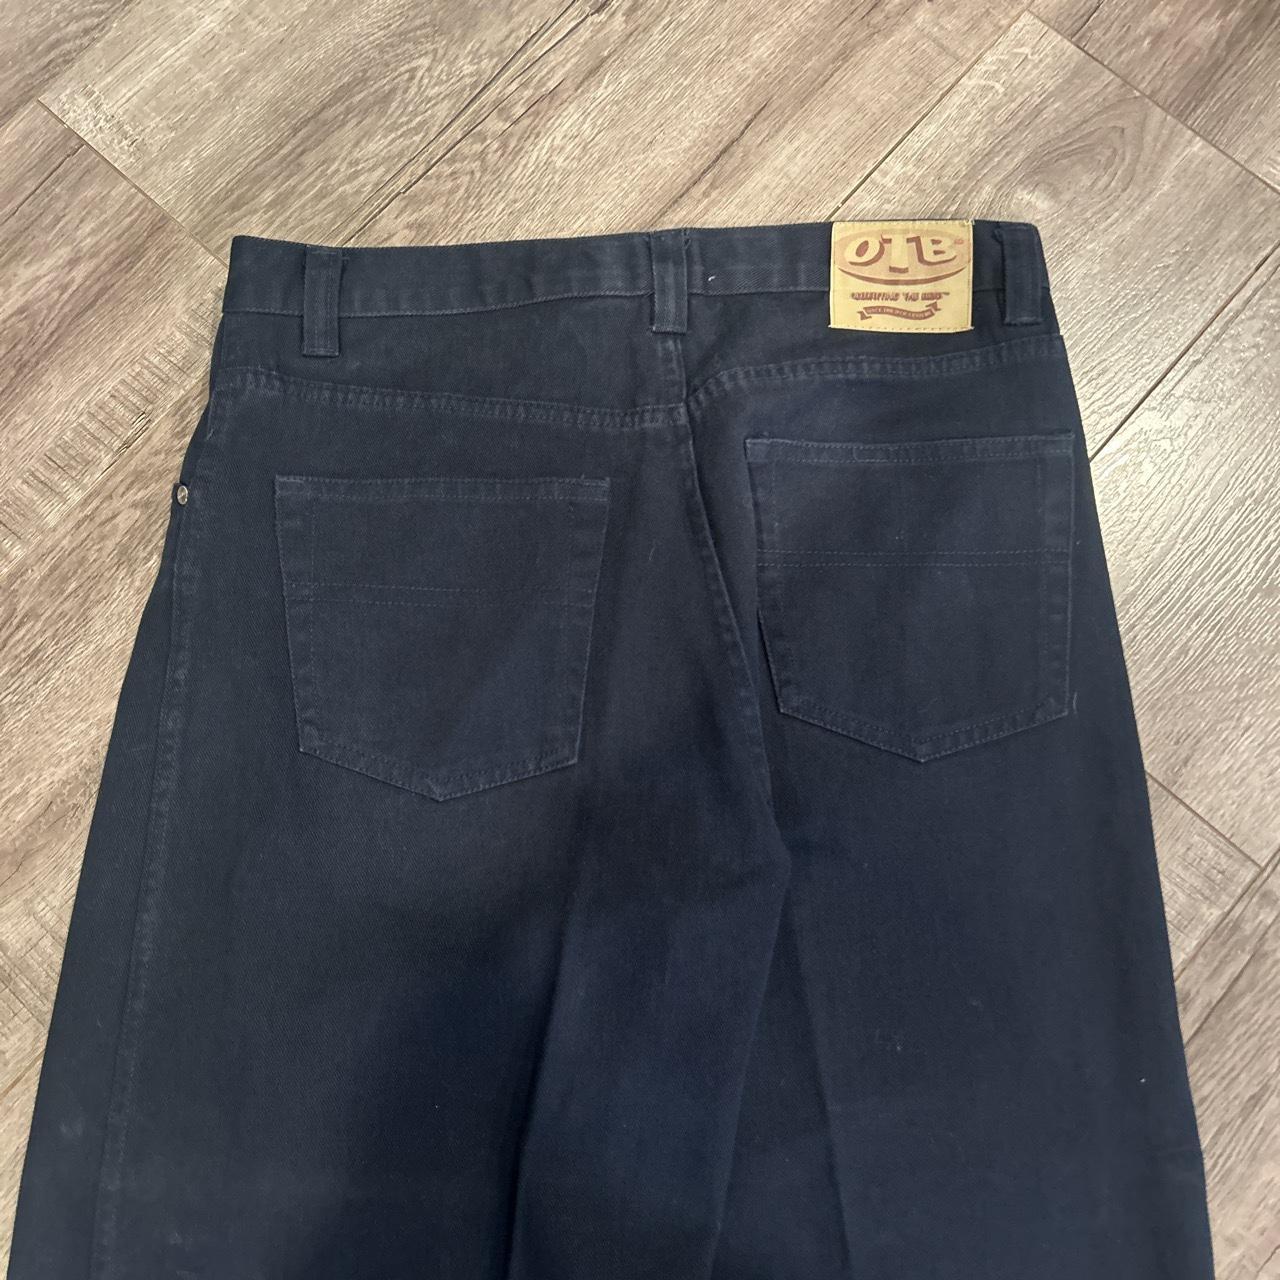 Vintage OTB Jeans Size 34, inseam 27, outseam... - Depop